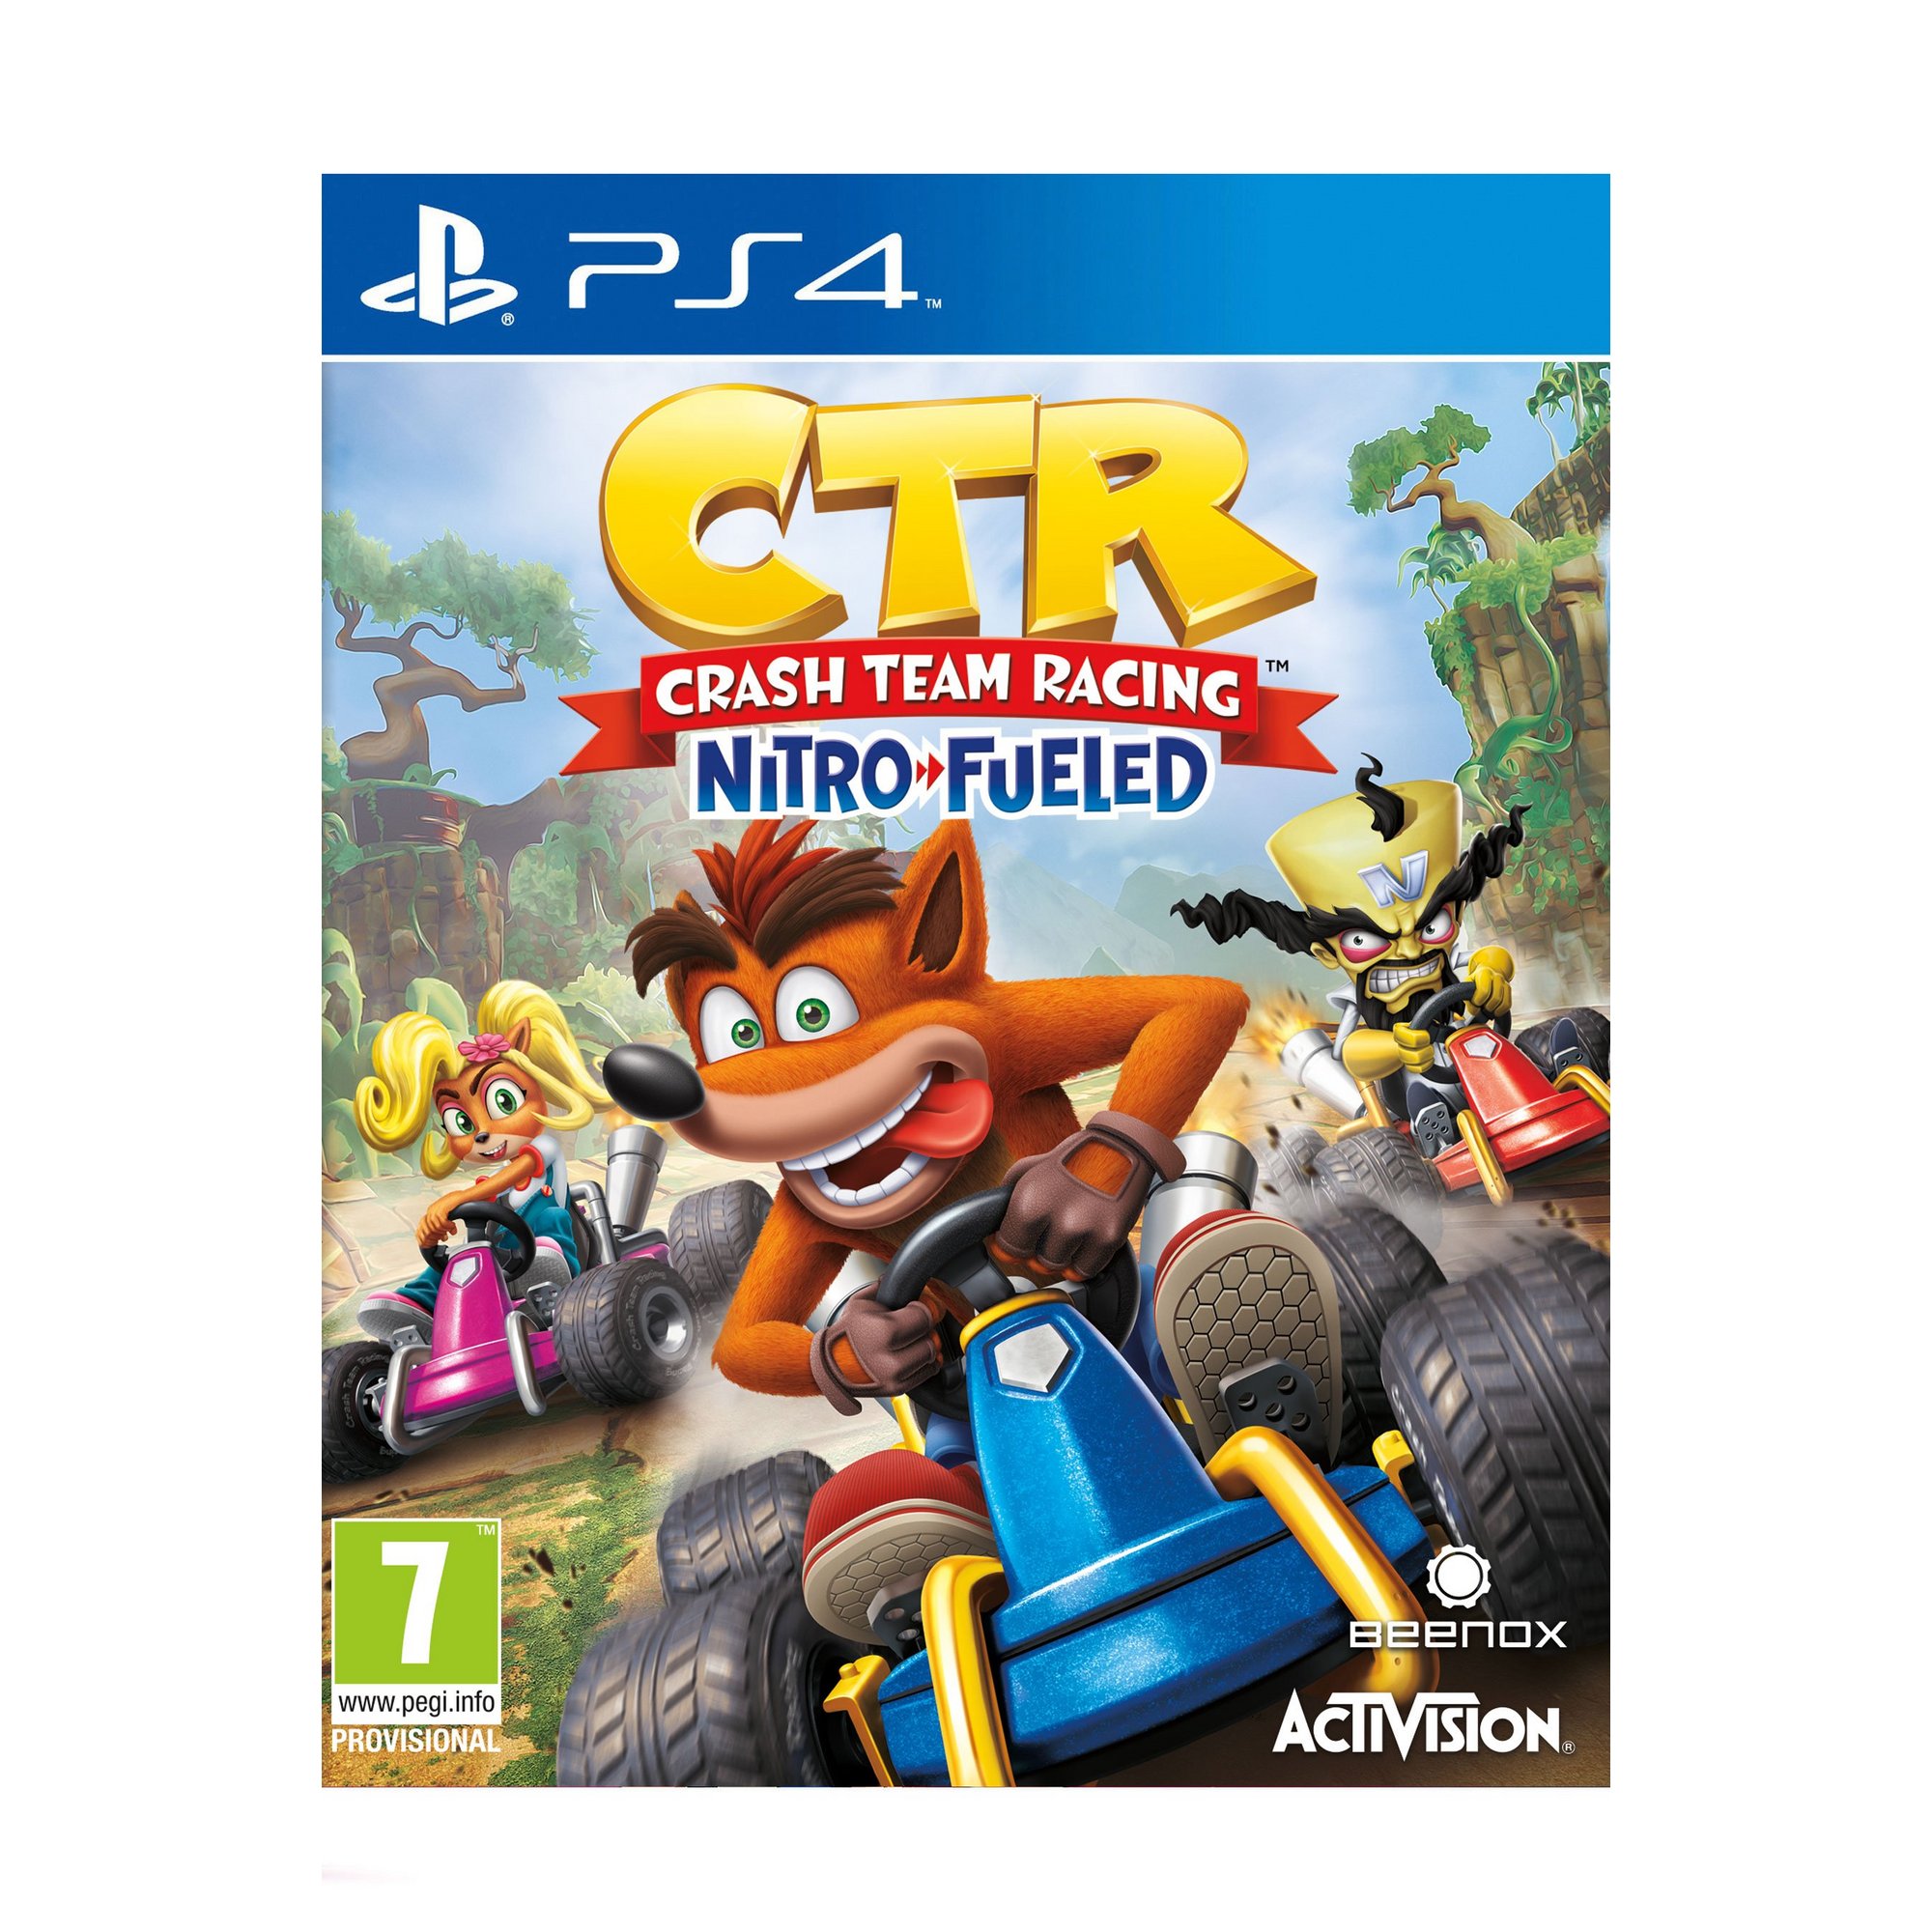 Sony PS4: Crash Team Racing Nitro Fueled